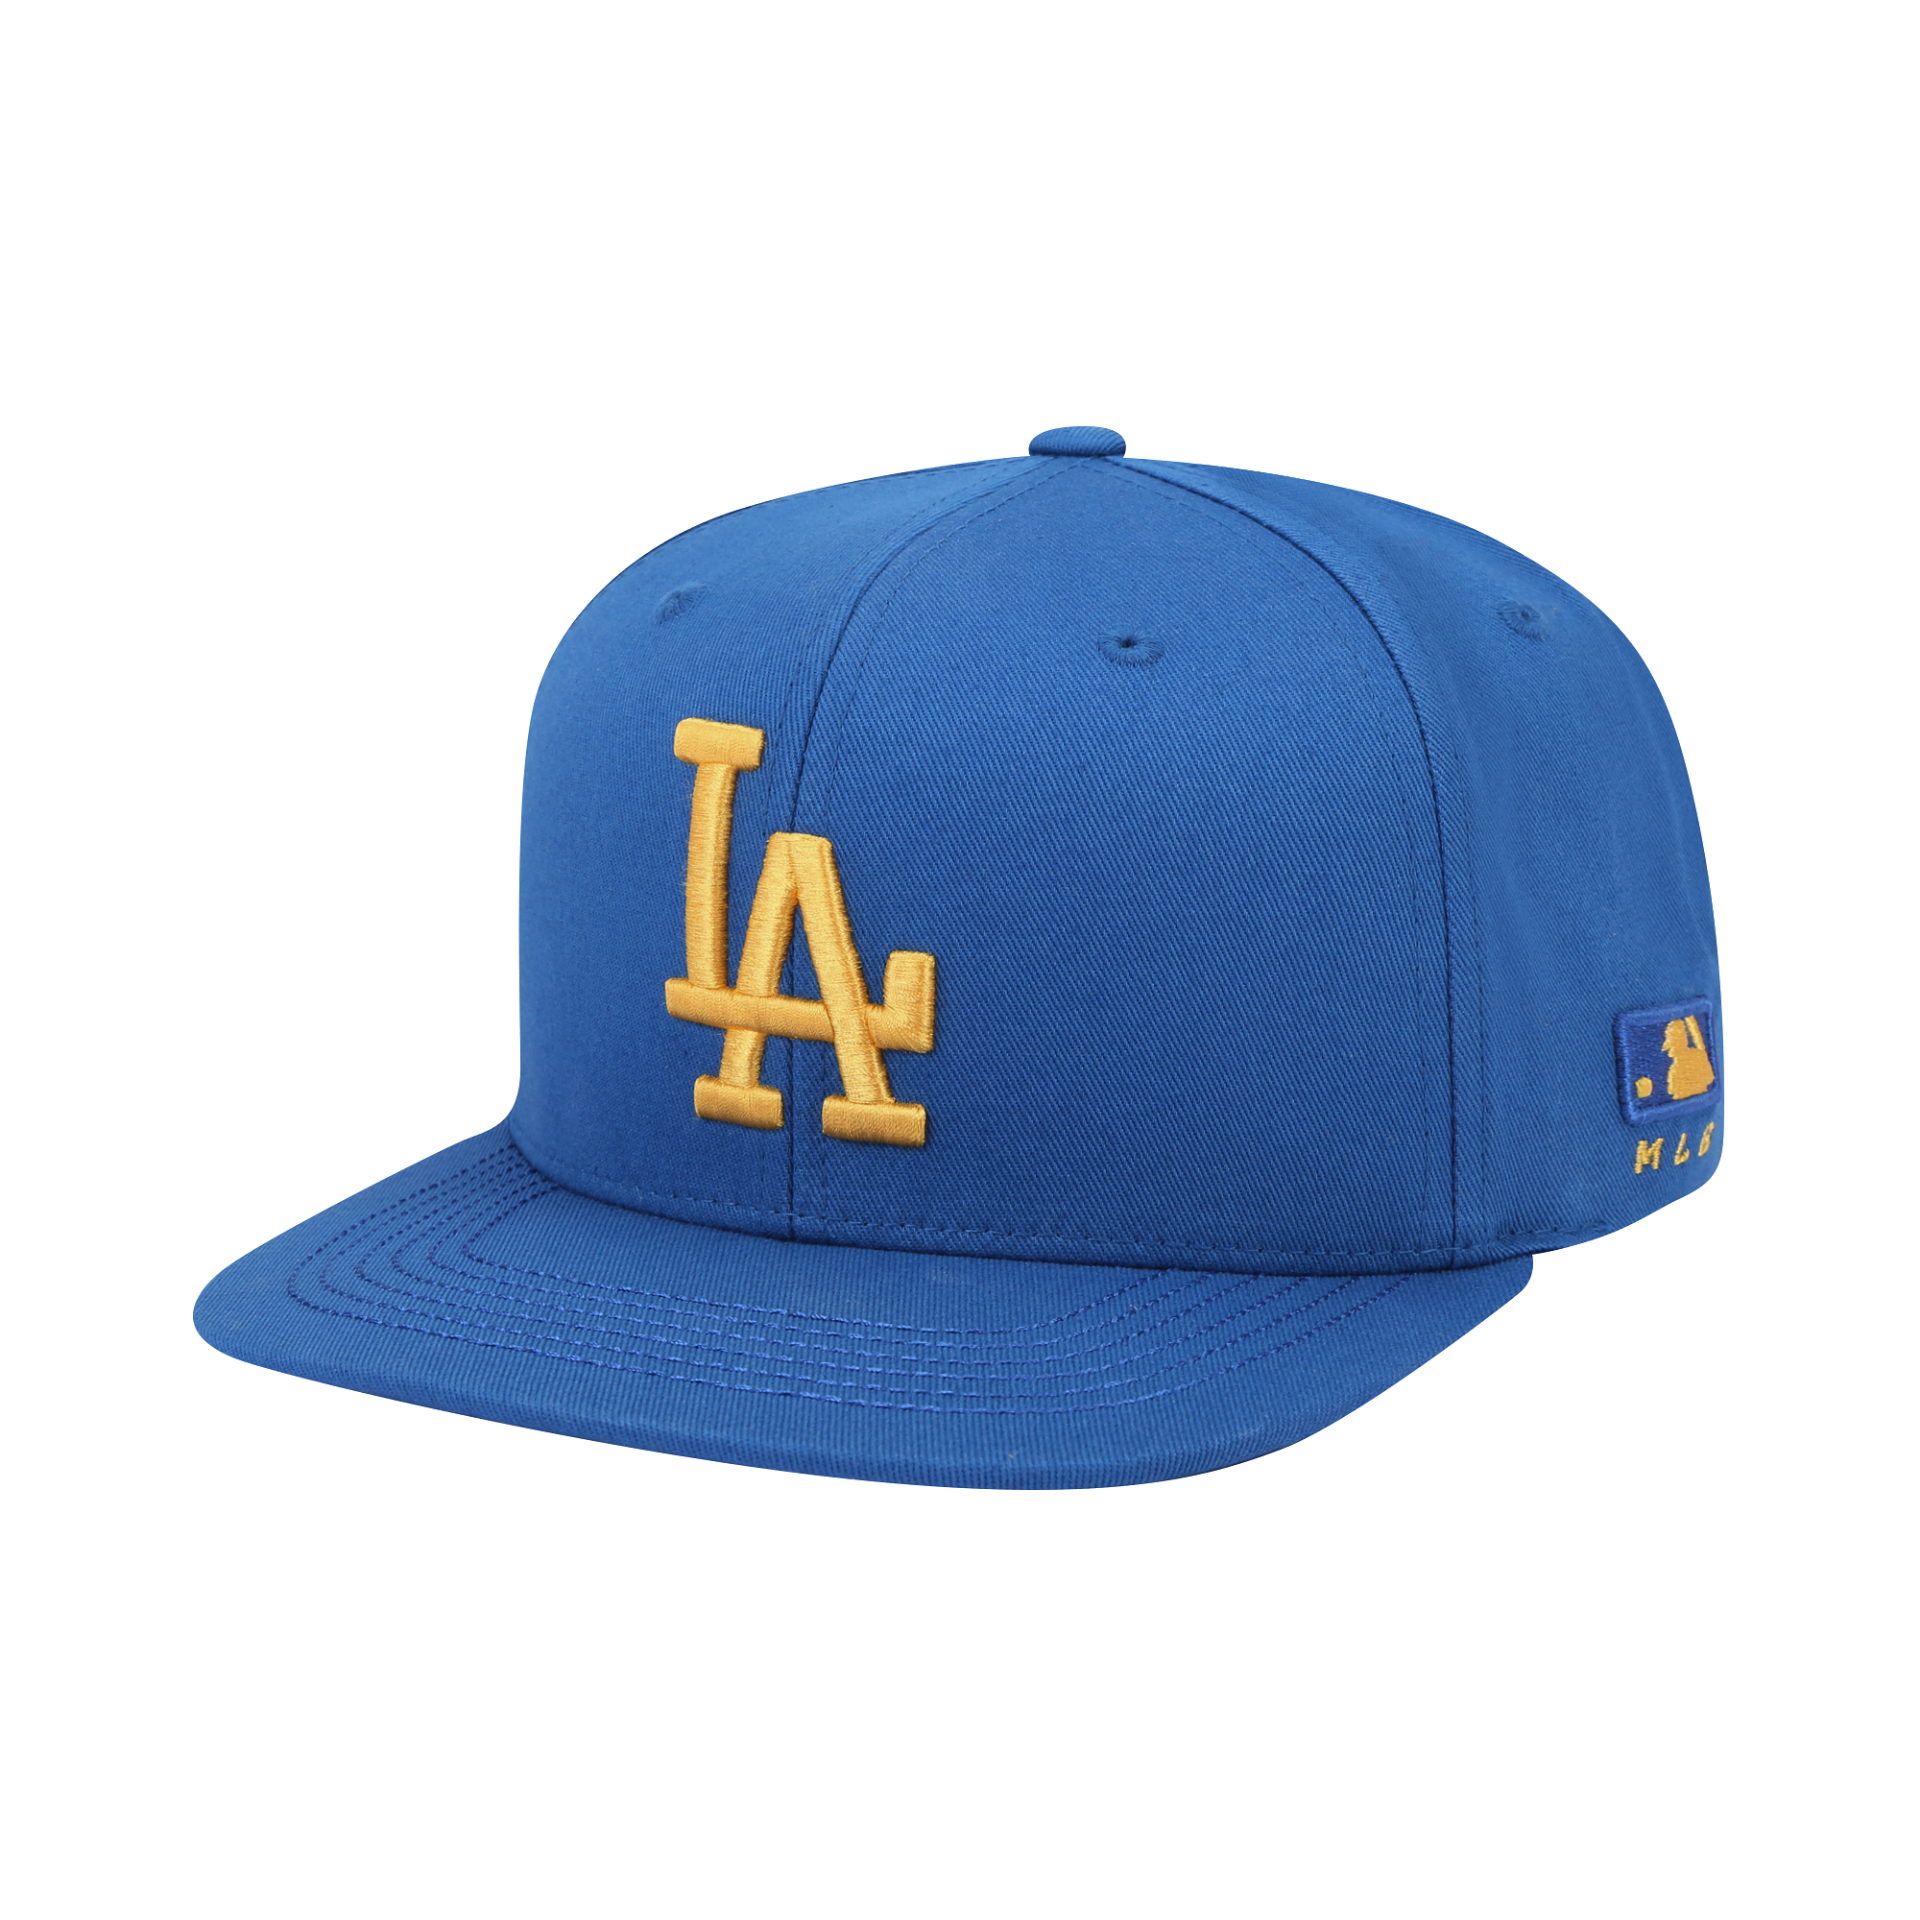 MLB LA Dodgers Cap OffWhite Headwear Caps White